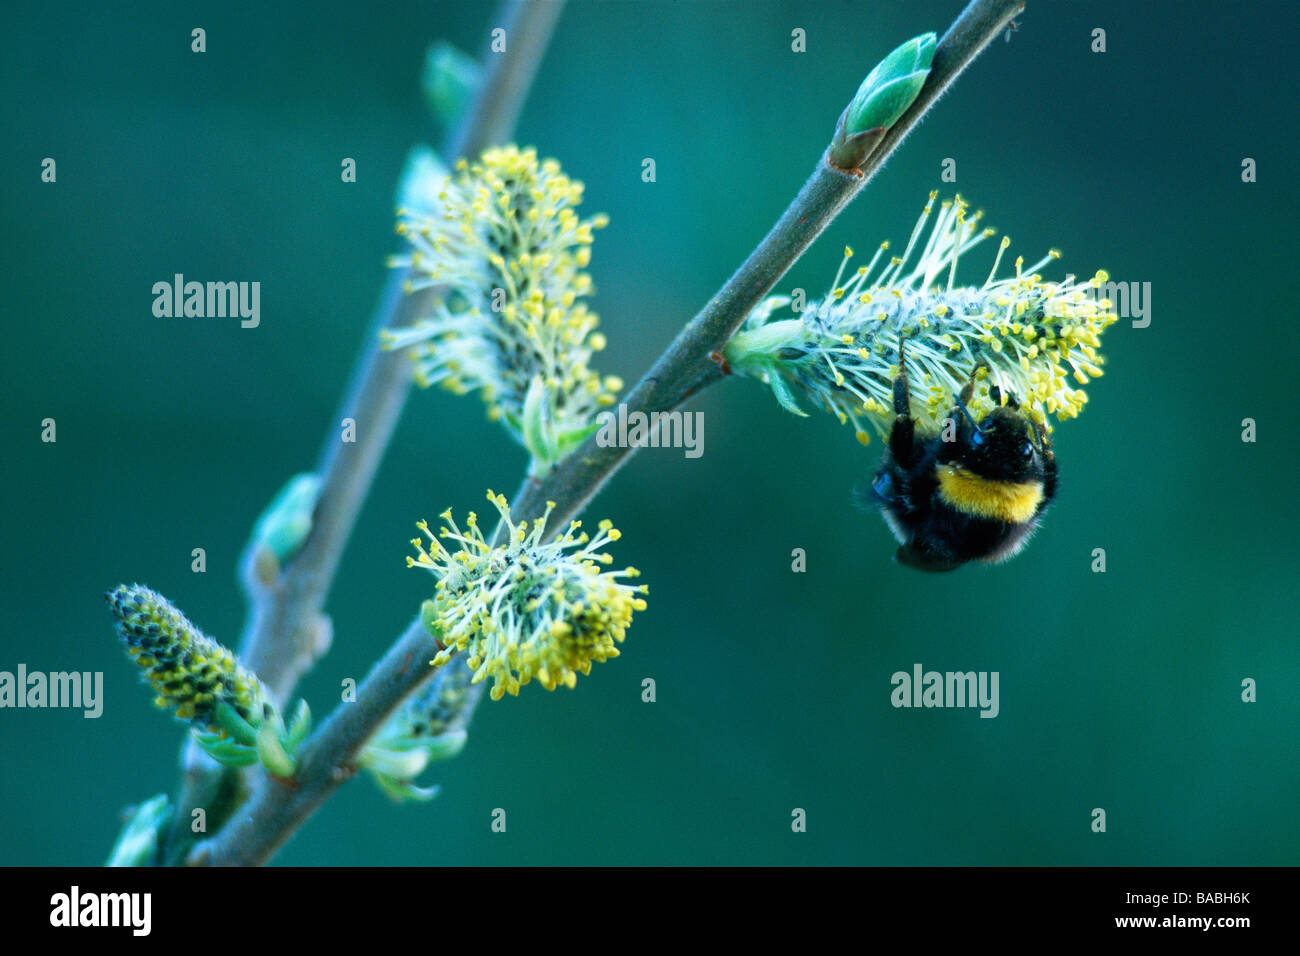 A bumblebee on sallow Stock Photo